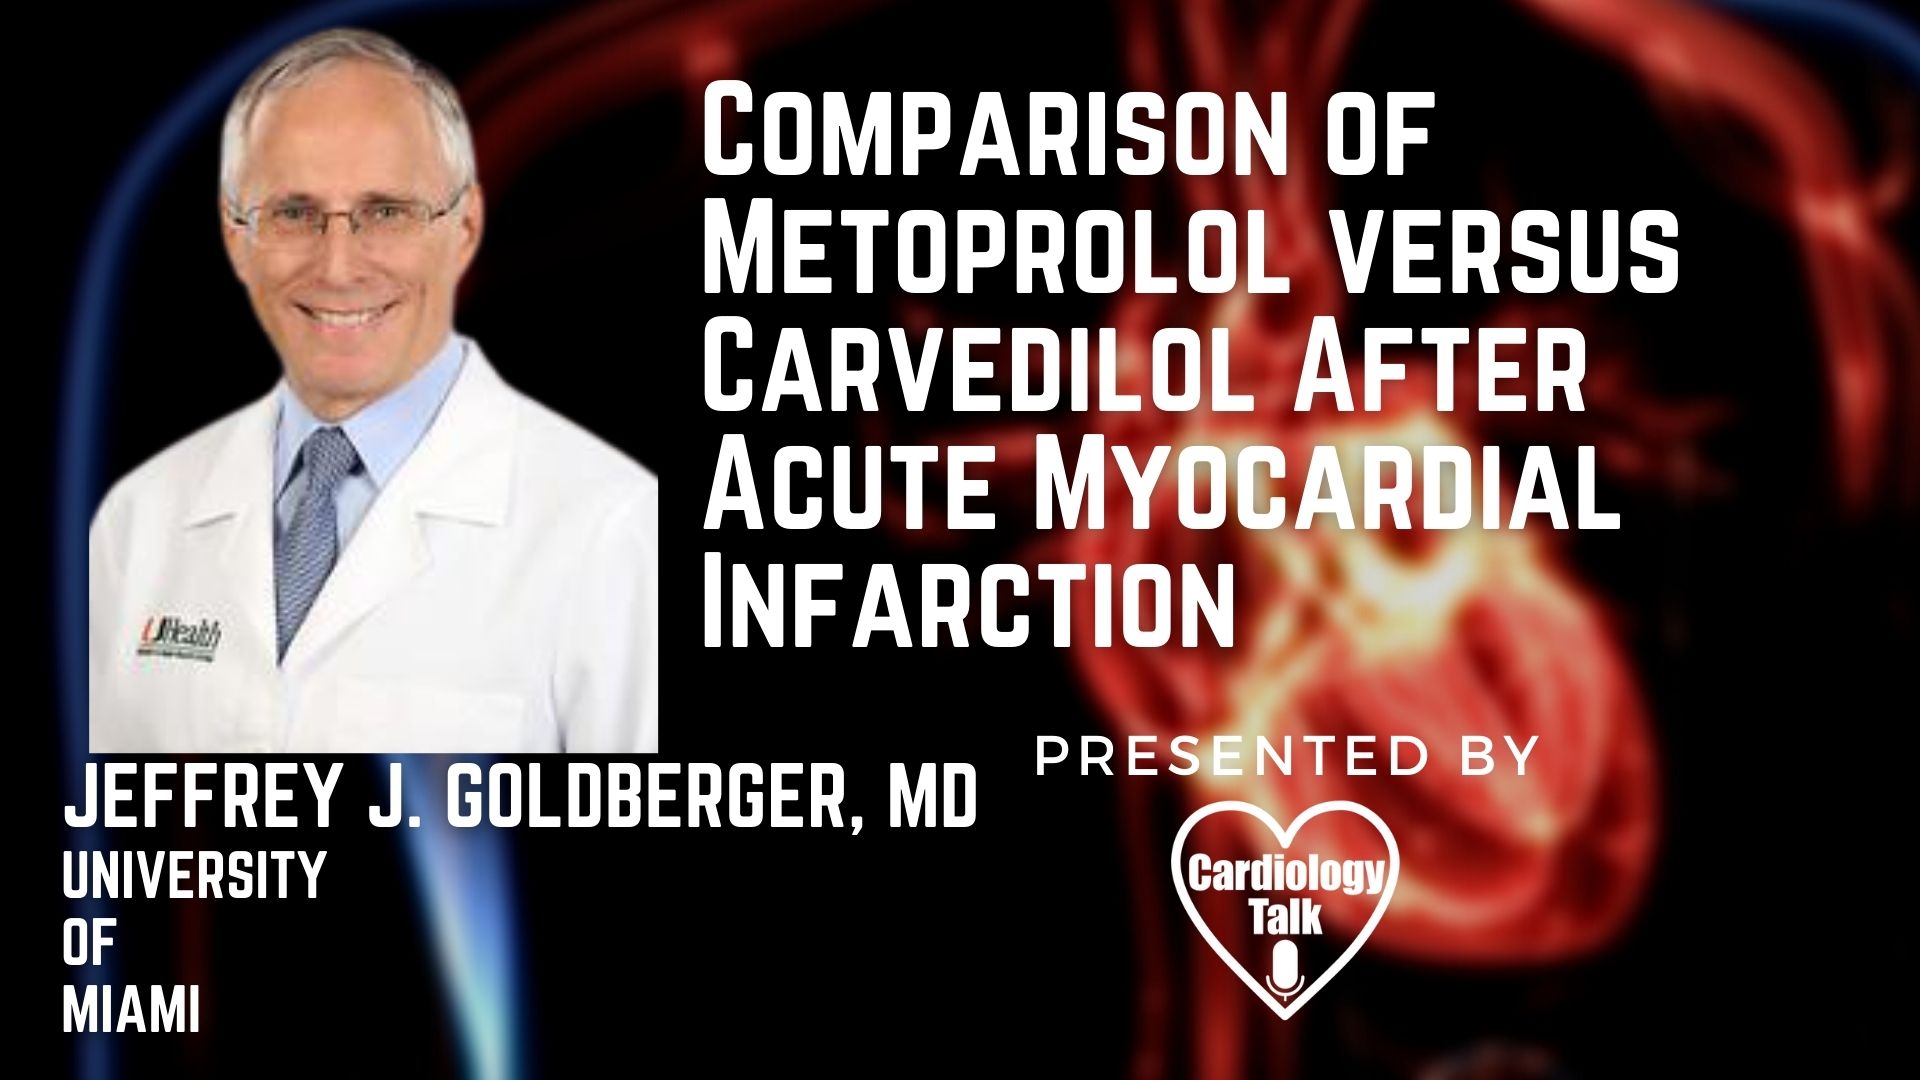 Jeffrey J. Goldberger, MD @DrJGoldberger @UMiamiHealth #OBTAINRegistry #MyocardialInfarction #Cardiology #Heart #Research Comparison of Metoprolol versus Carvedilol After Acute Myocardial...